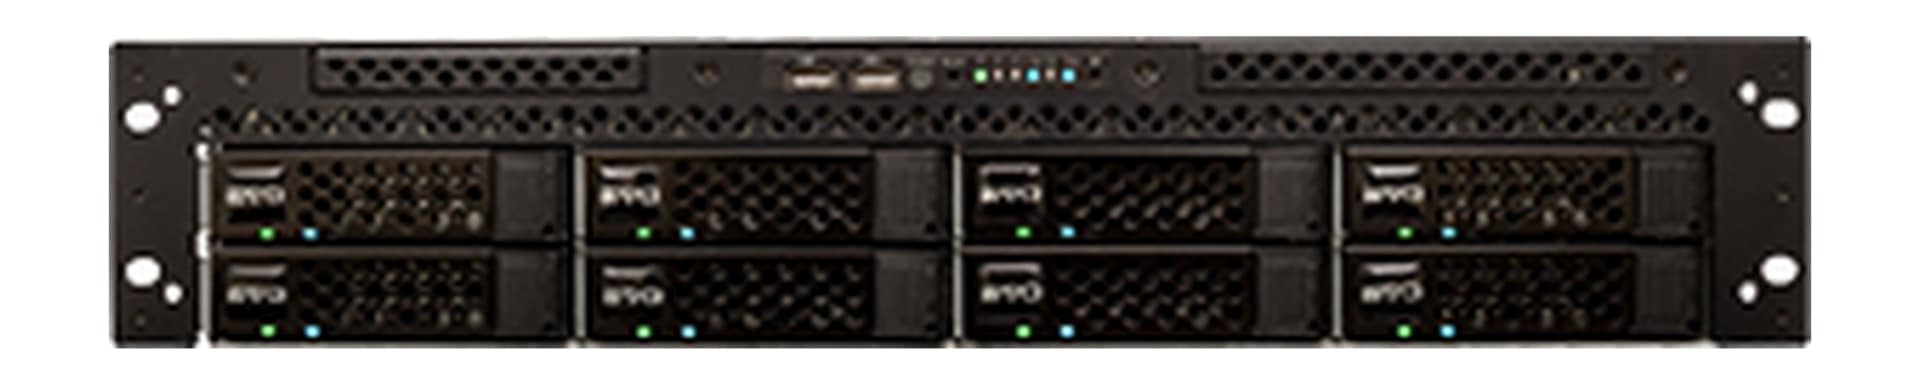 SNS EVO 2U 8 Bay Shared Storage Server with 80TB Raw Capacity Hard Drive